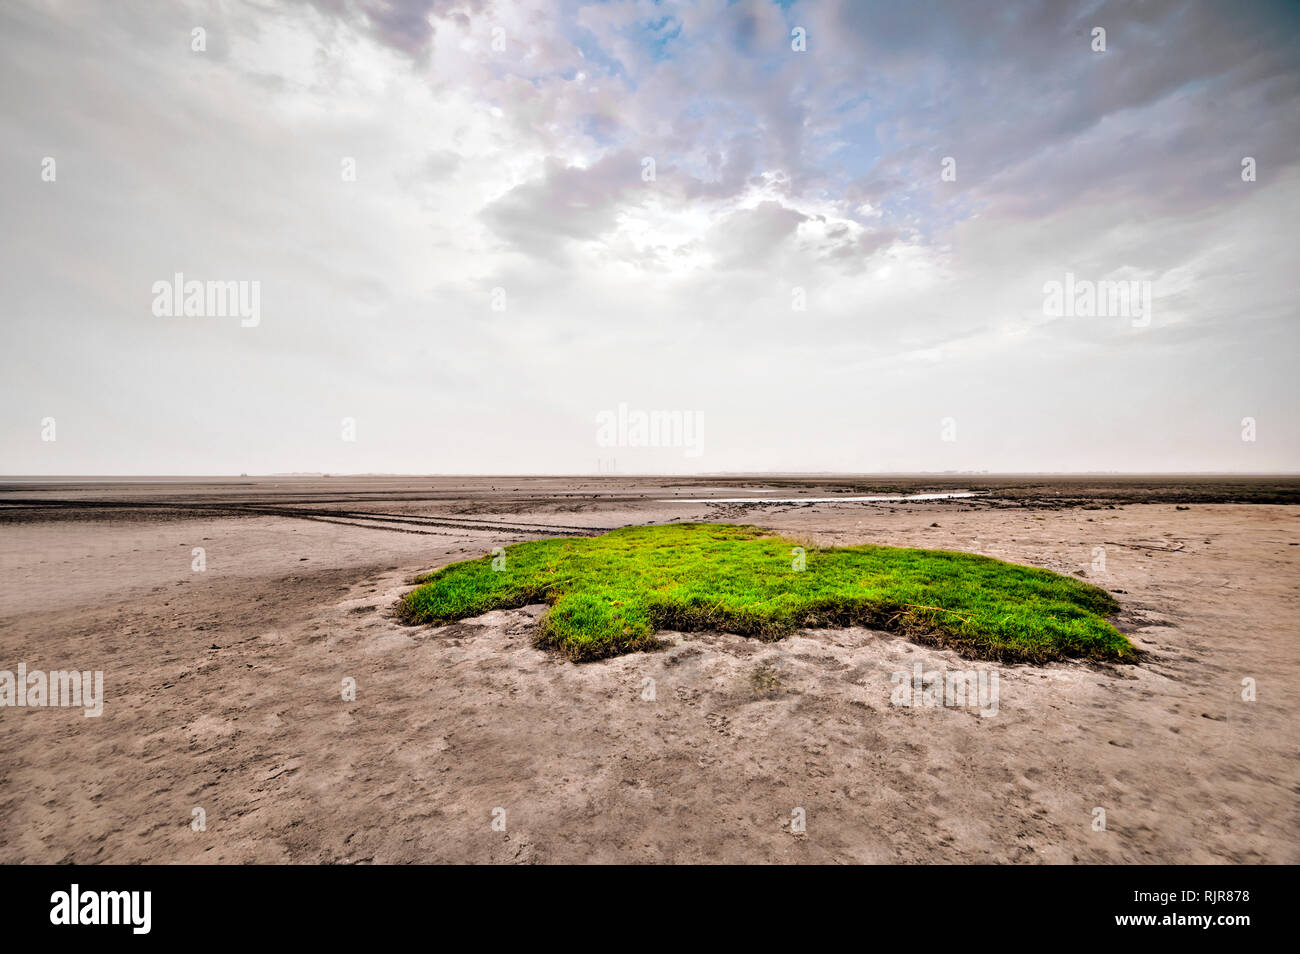 Green Spot on Kuwait Desert Stock Photo